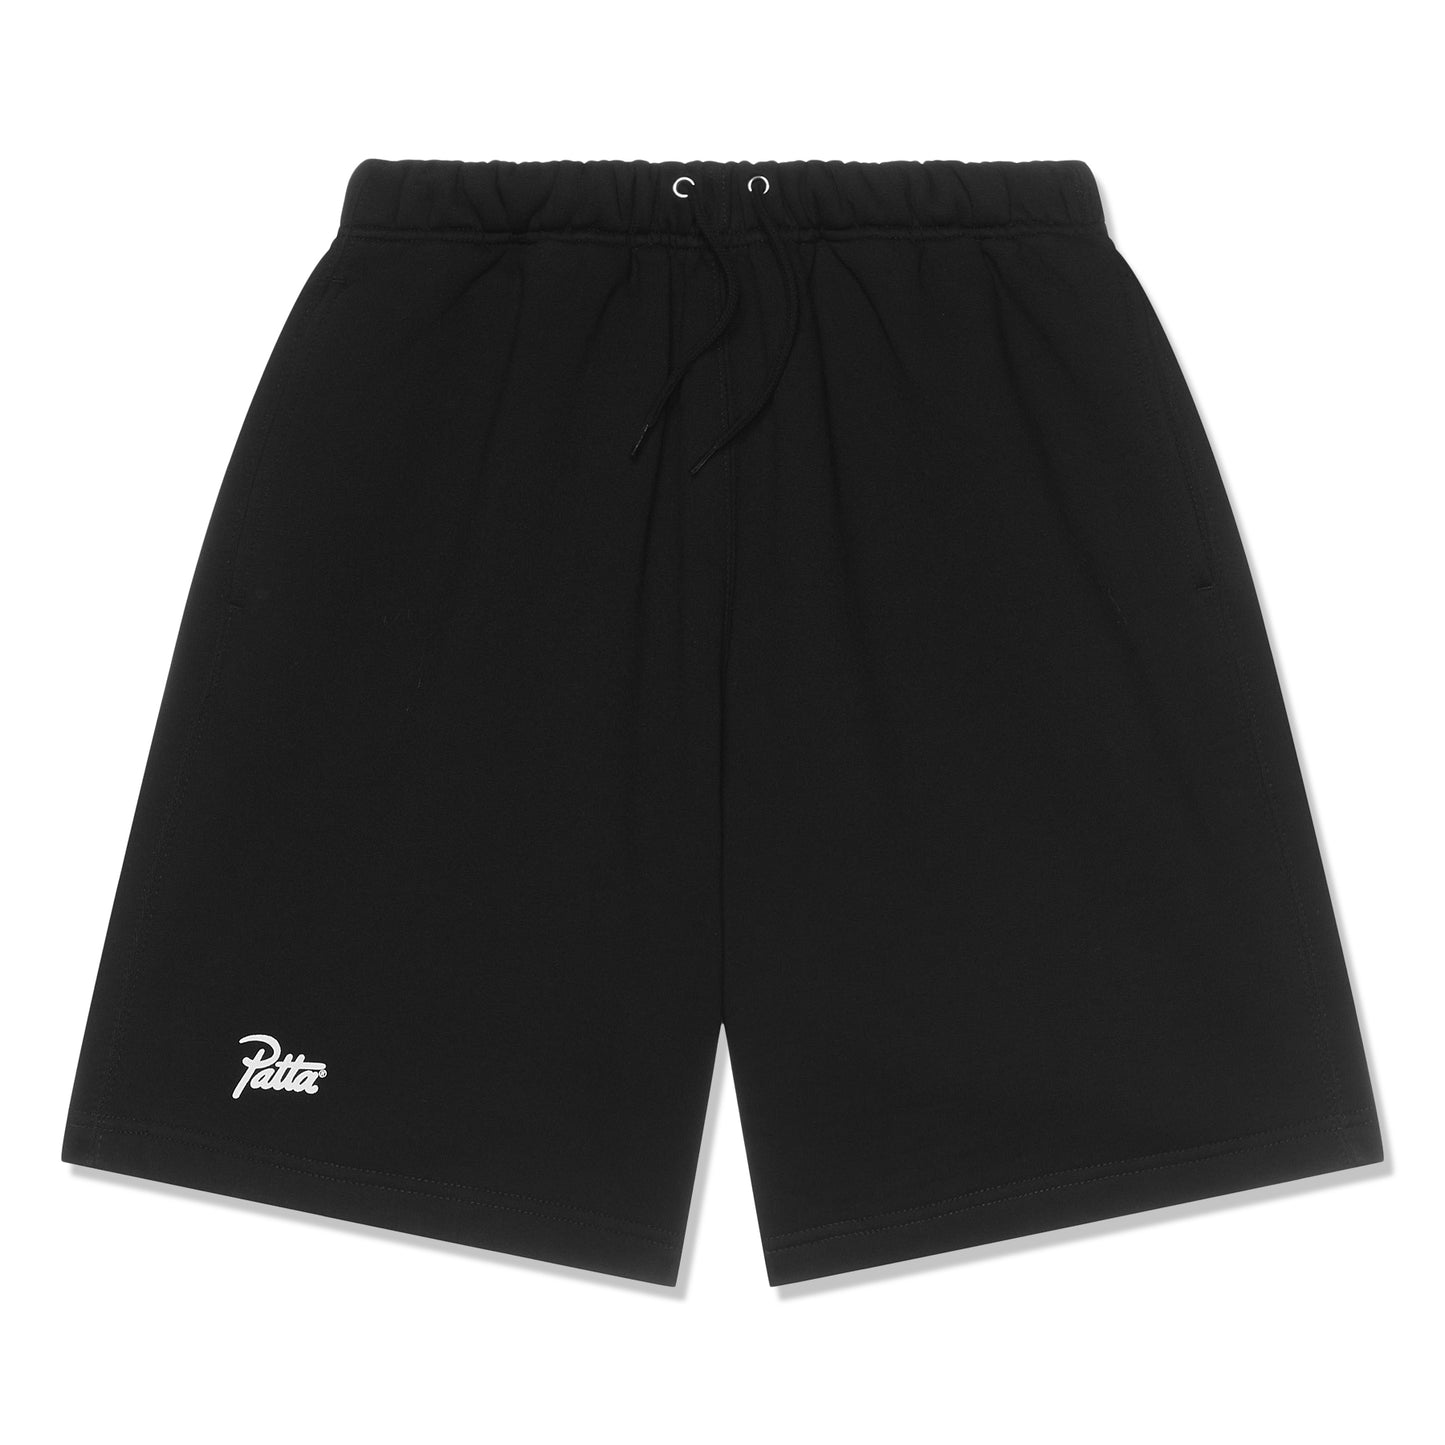 Patta Classic Jogging Shorts (Black)